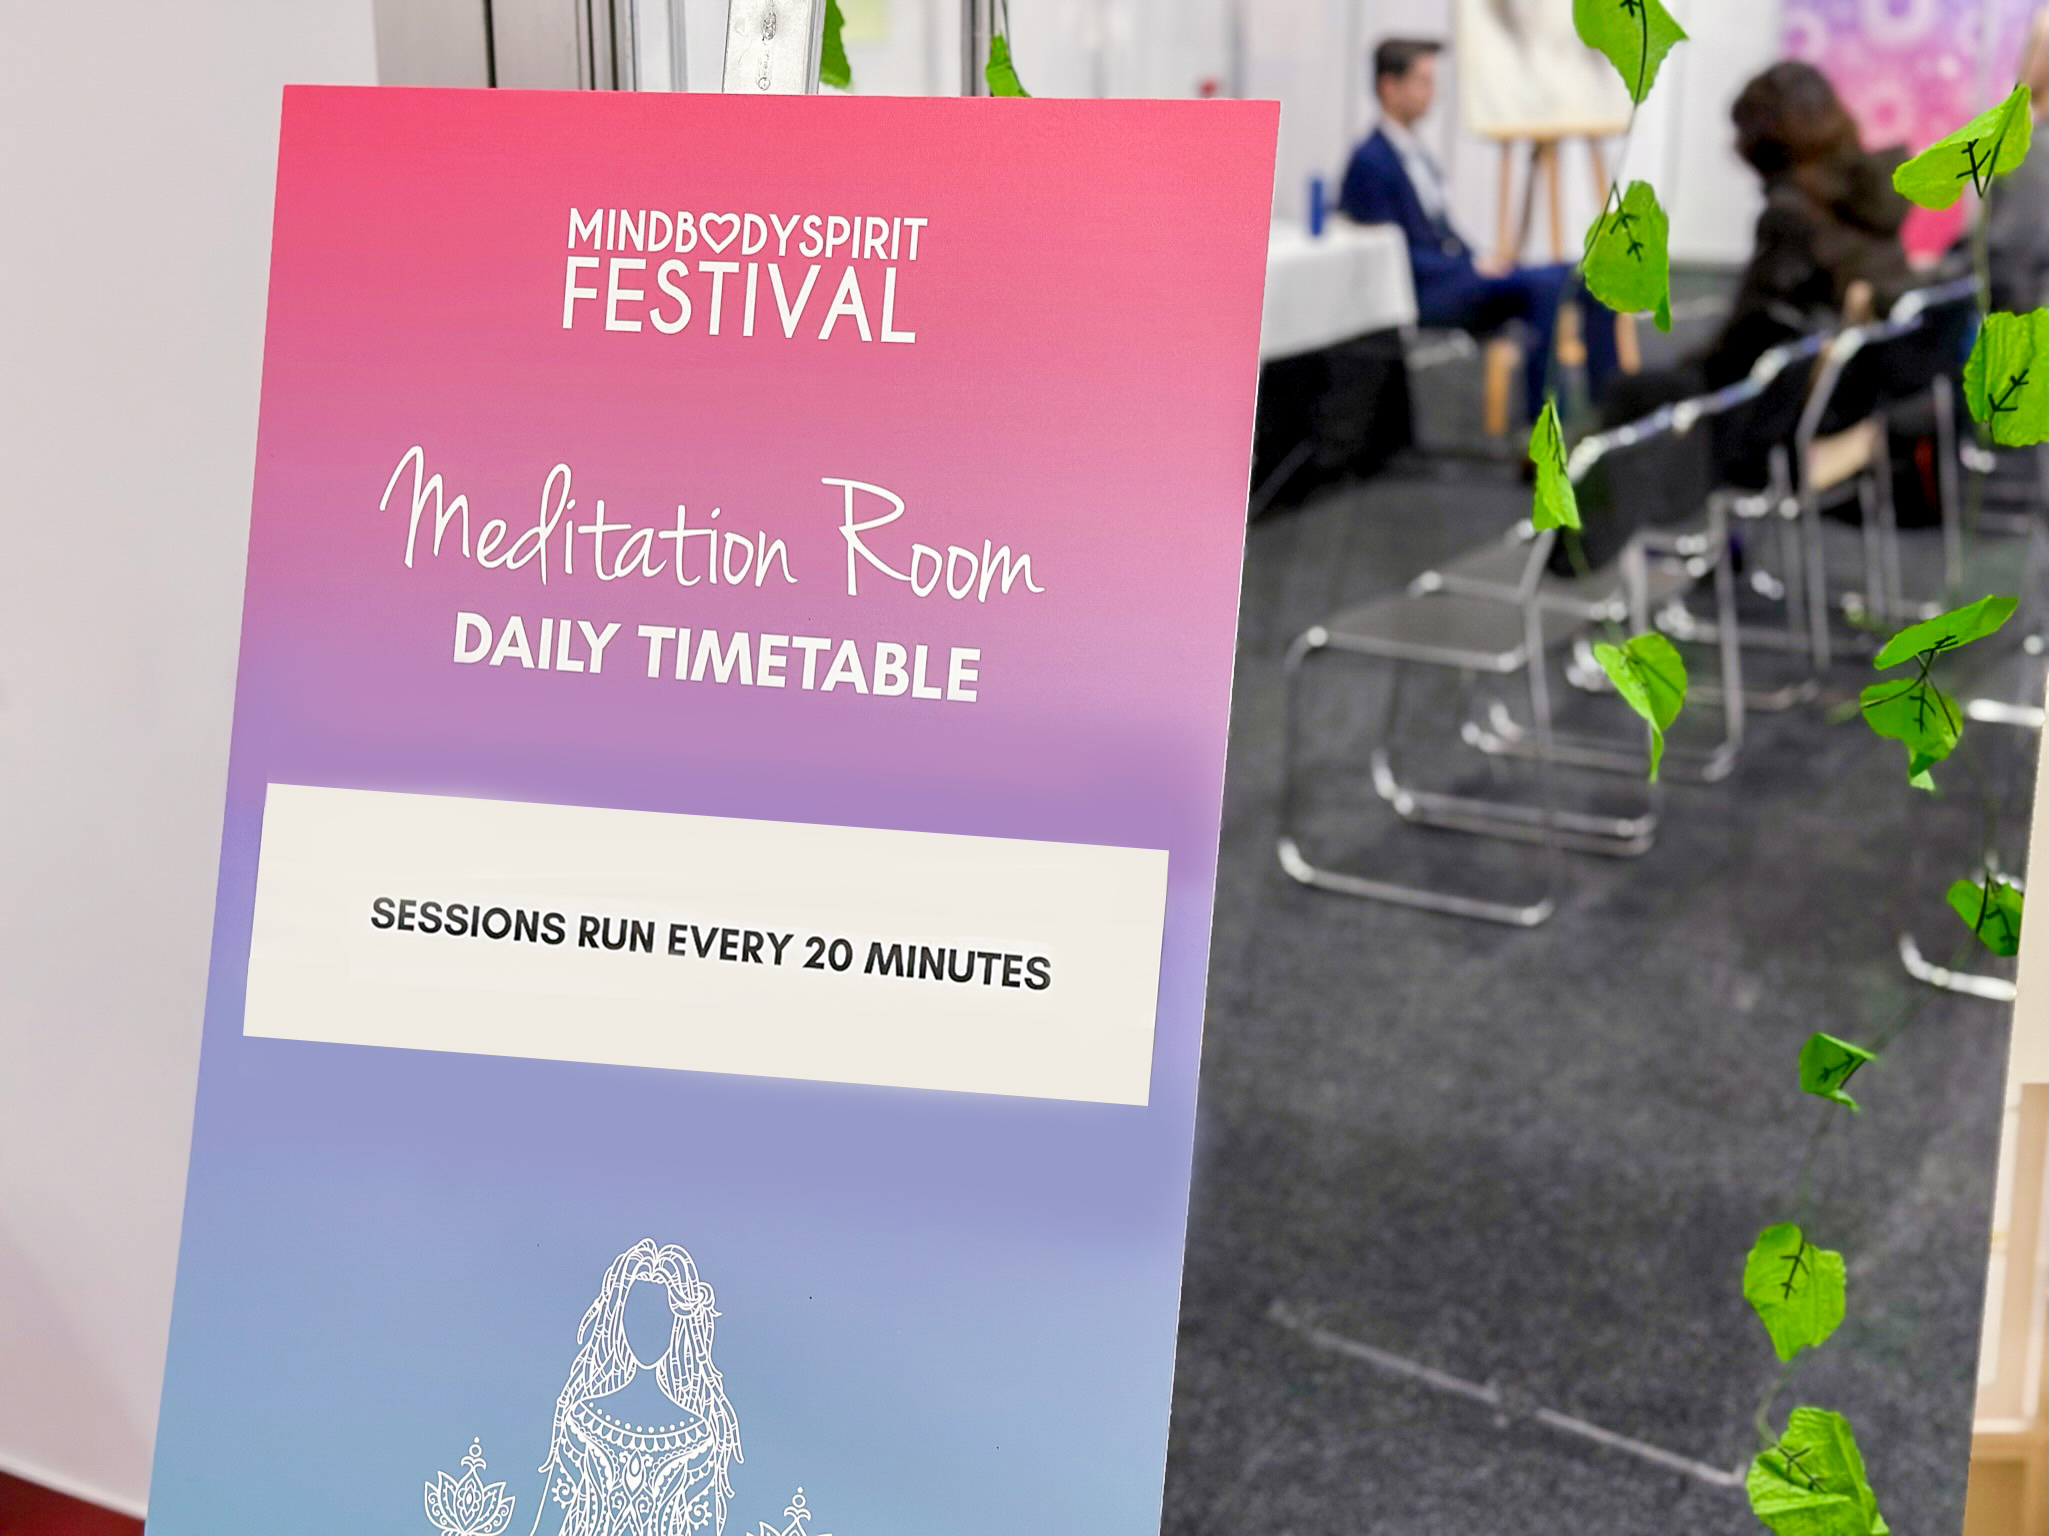 Meditation Room timetable at Brisbane MindBodySpirit Festival